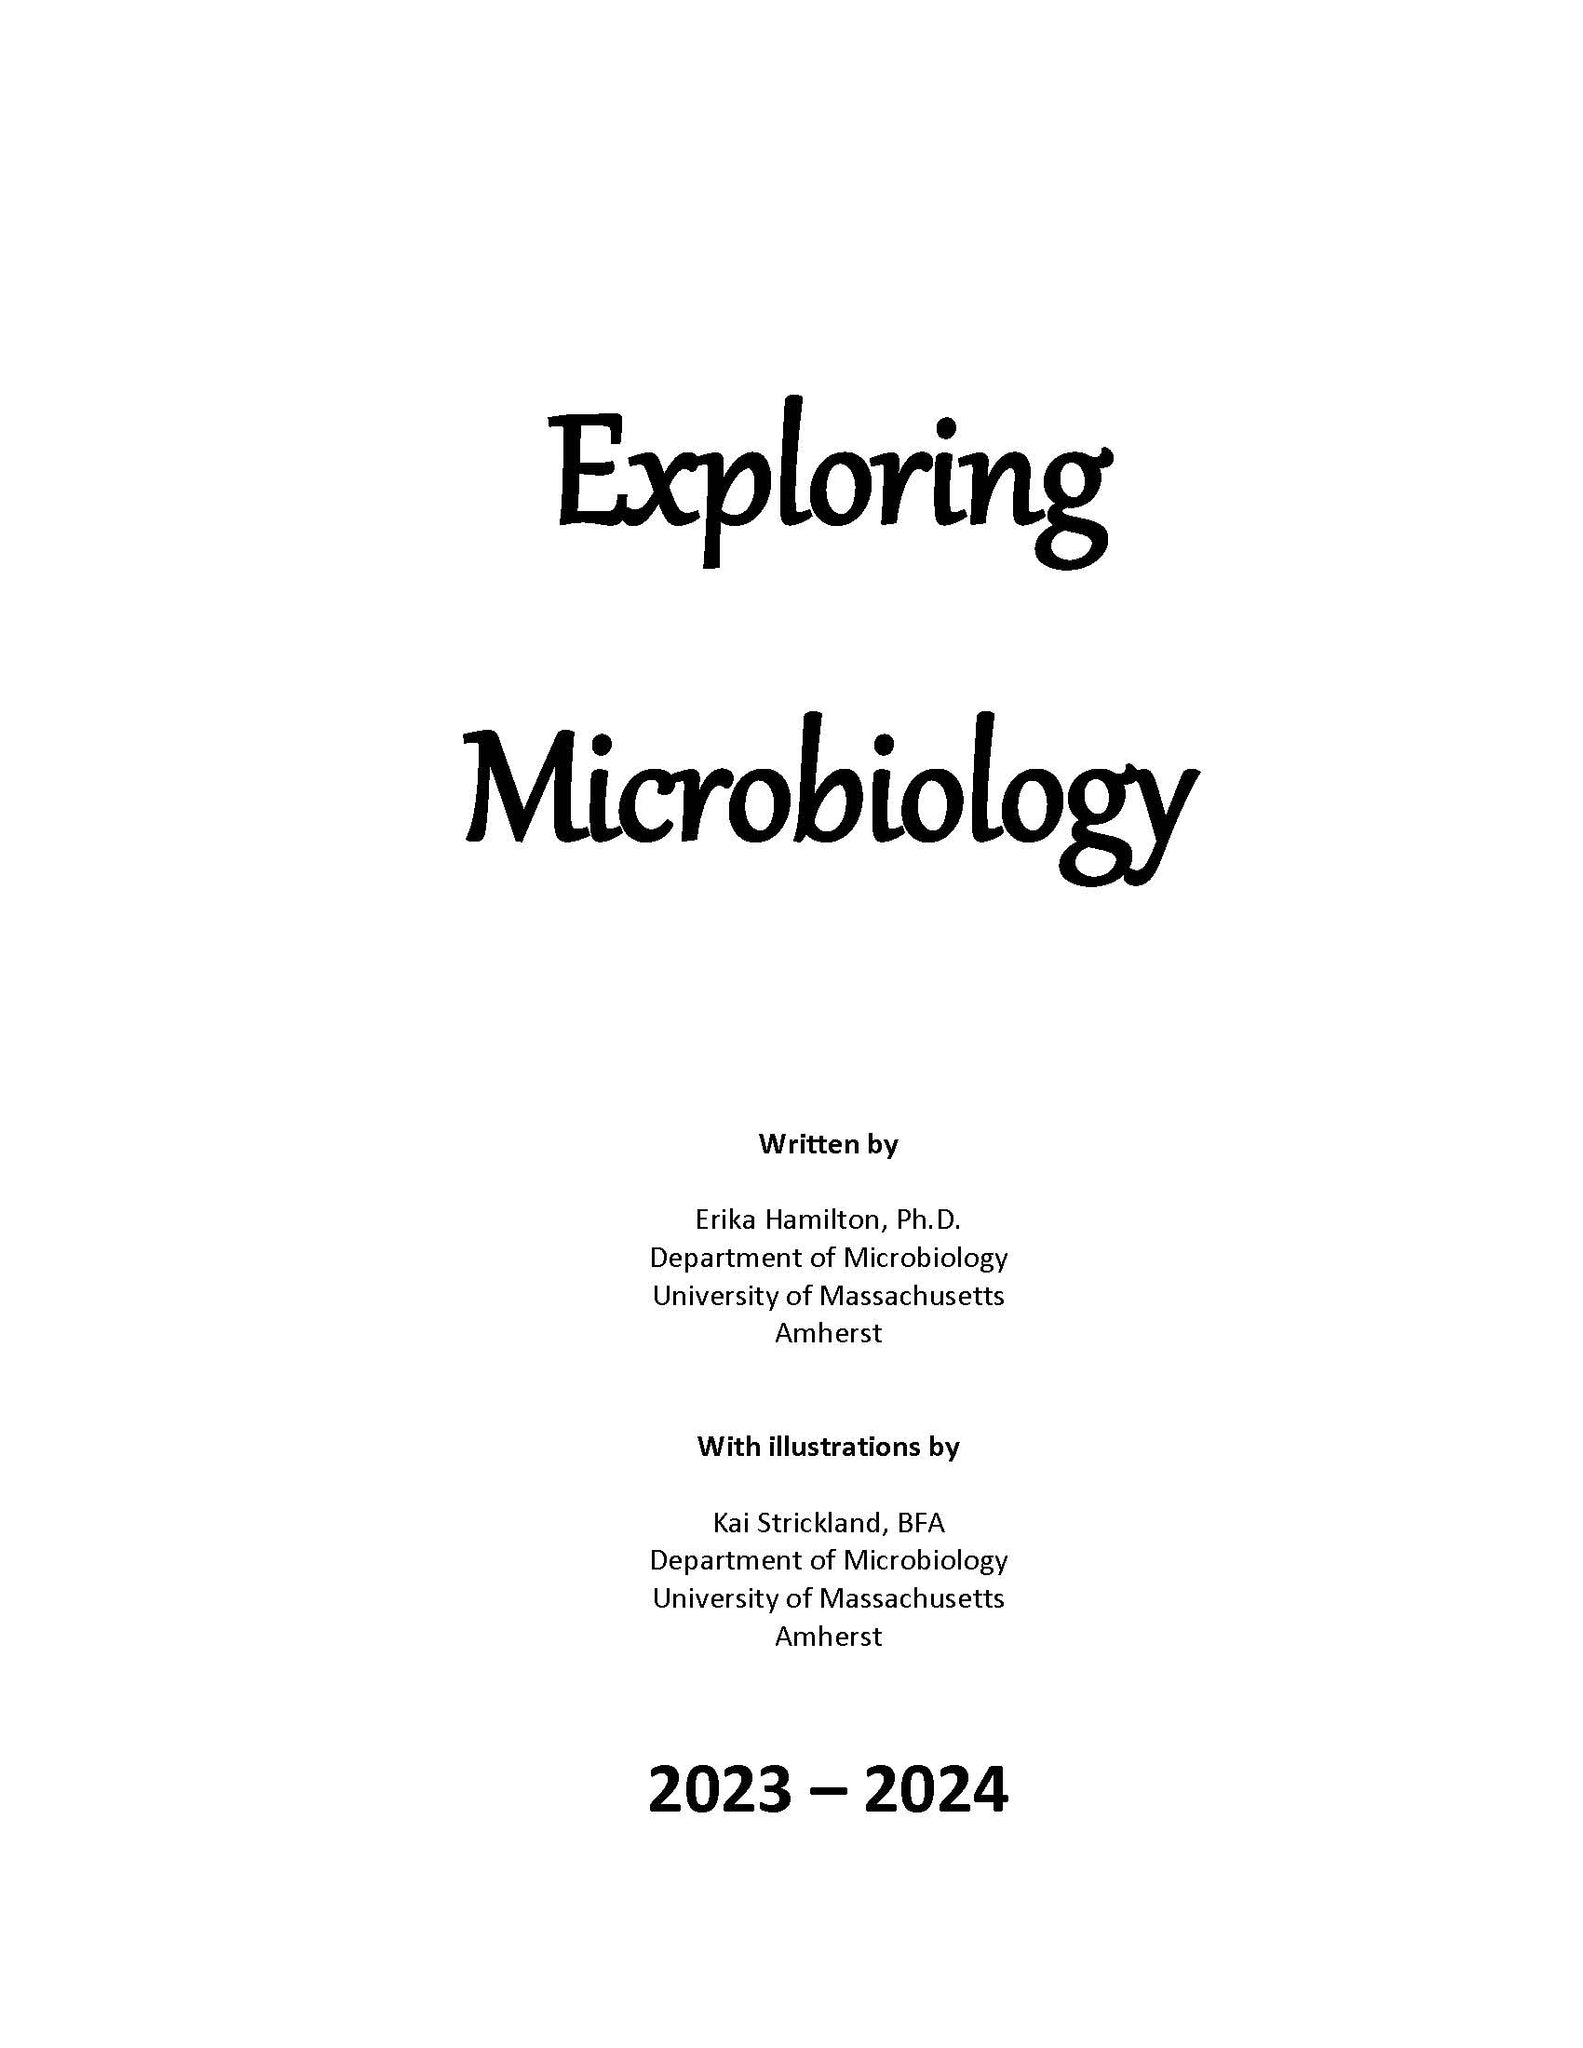 Exploring Microbiology